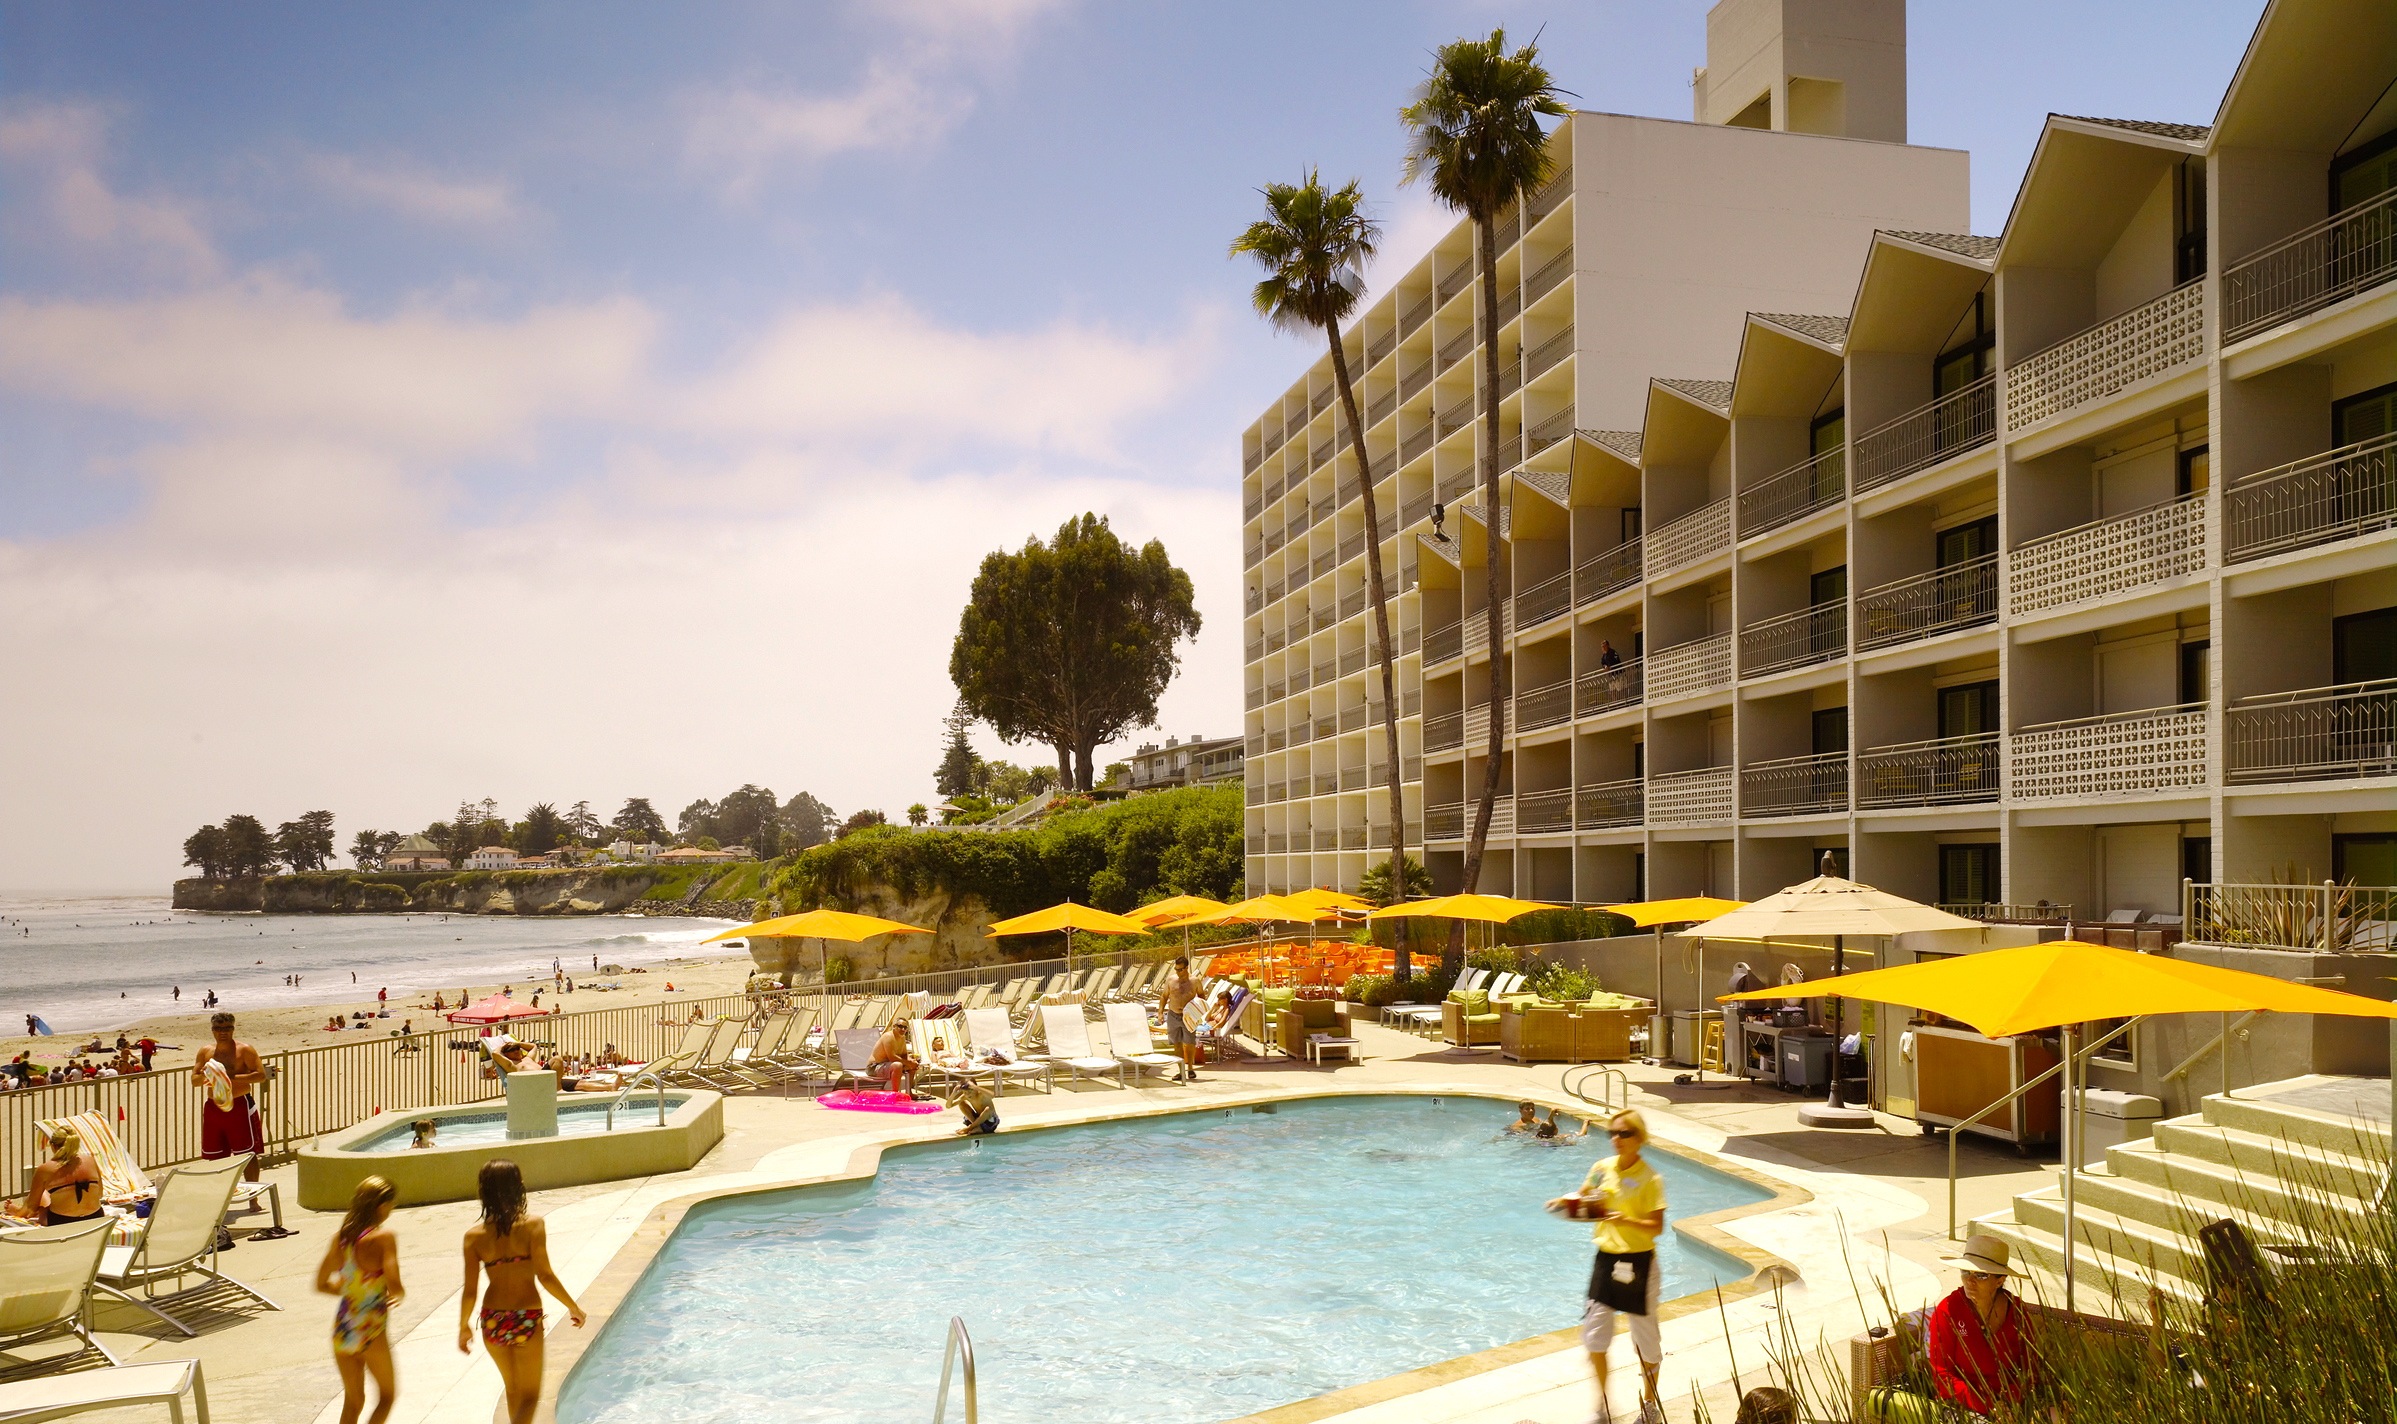 Santa Cruz Hotels: The Ultimate Guide to Hotels in Santa Cruz